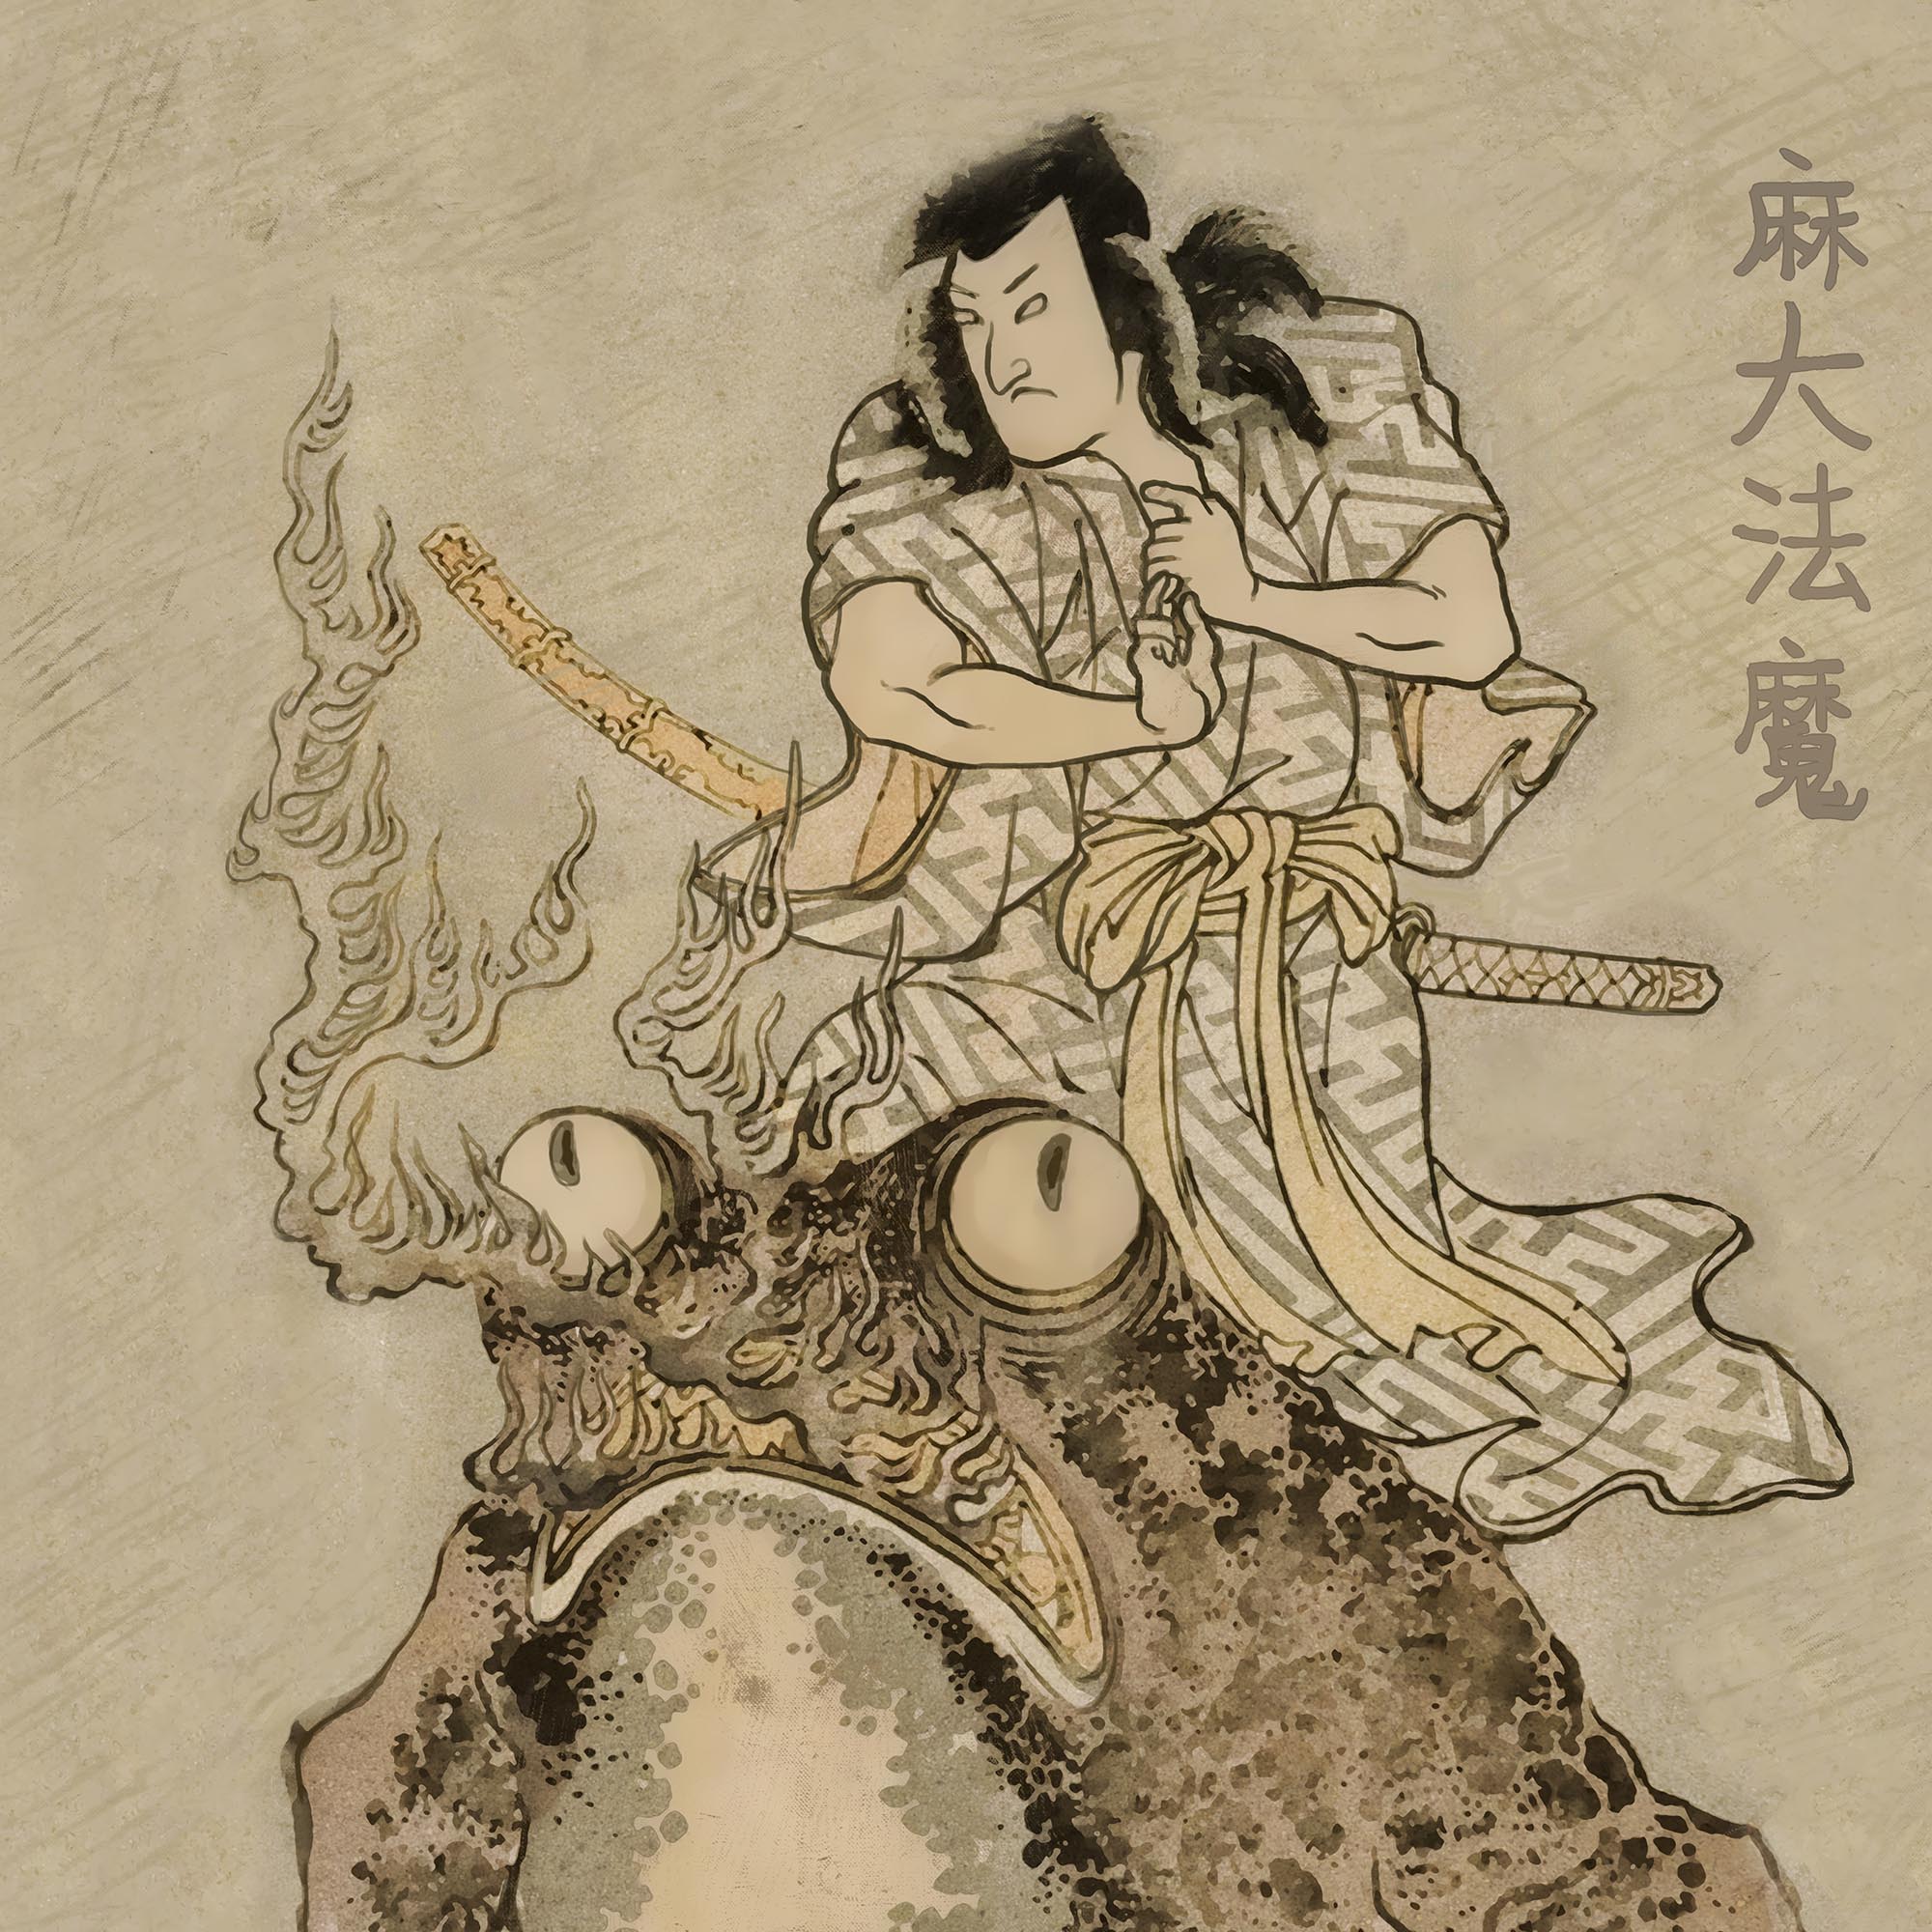 giclee Utagawa Kunisada: Magician with a Giant Toad, Ukiyo-e Samurai Ronin Sorcerer Kawaii Mythology Occult Fantasy Japanese Fine Art Print